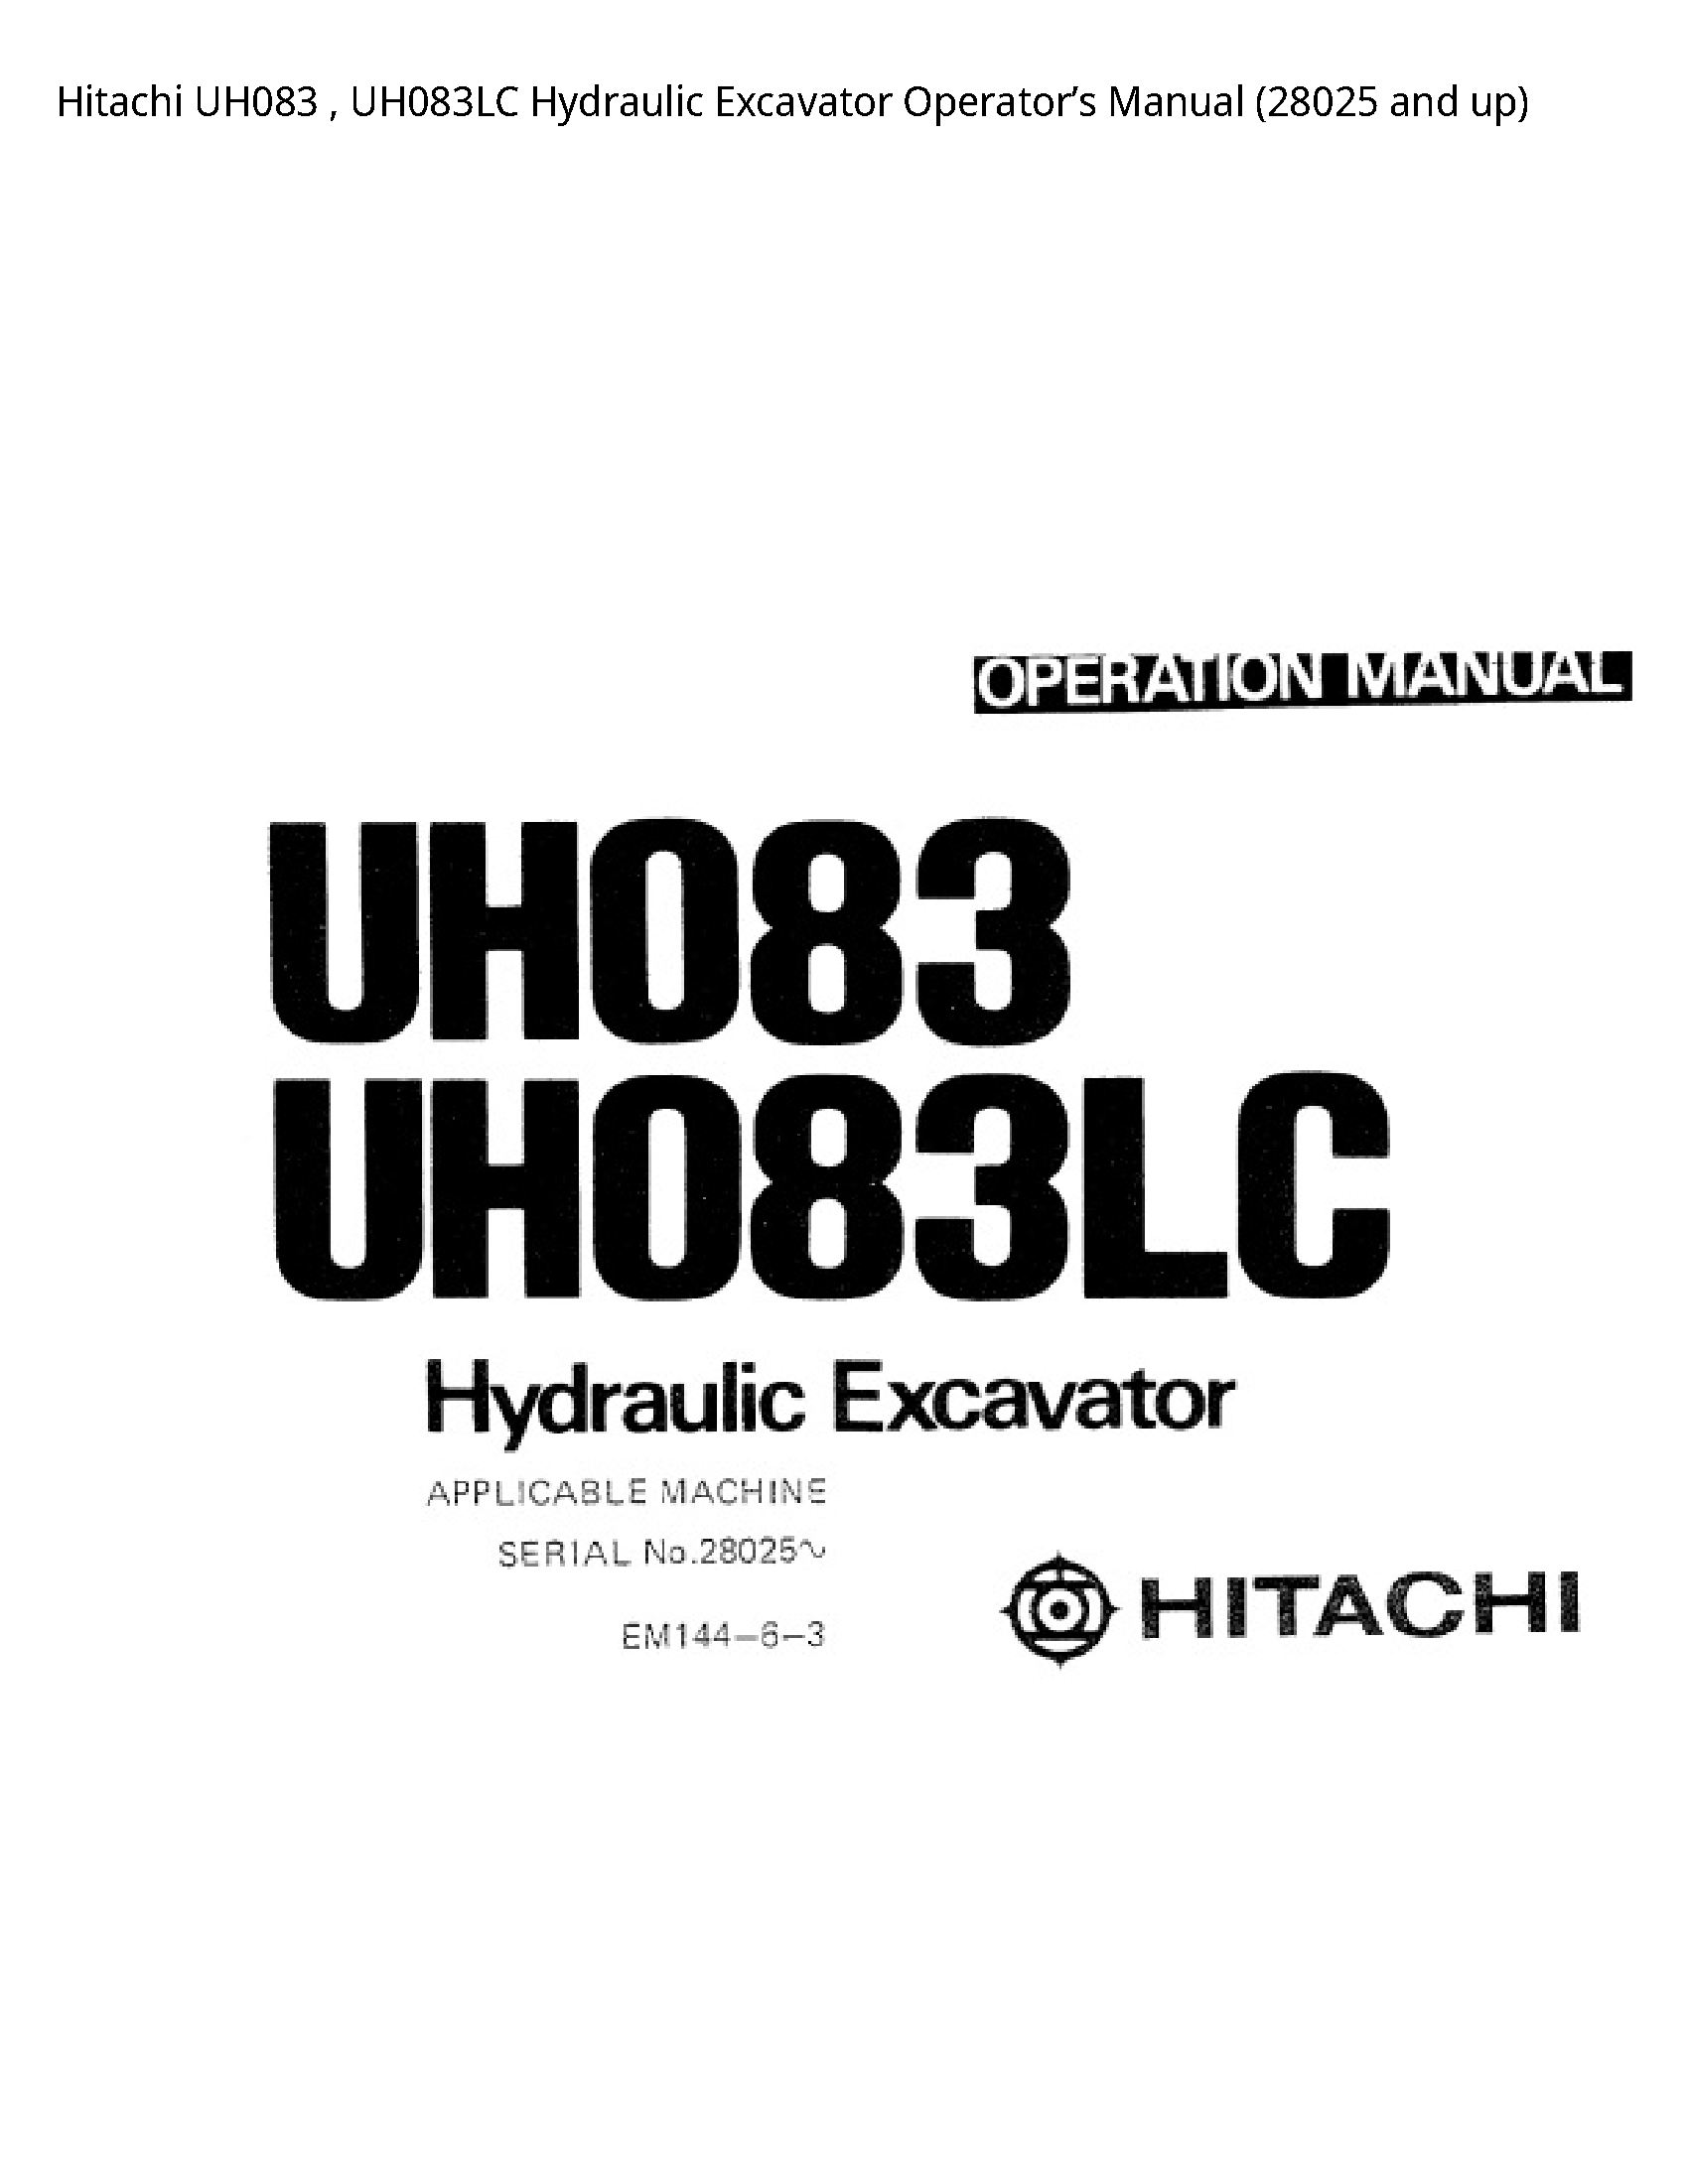 Hitachi UH083 Hydraulic Excavator Operator’s manual